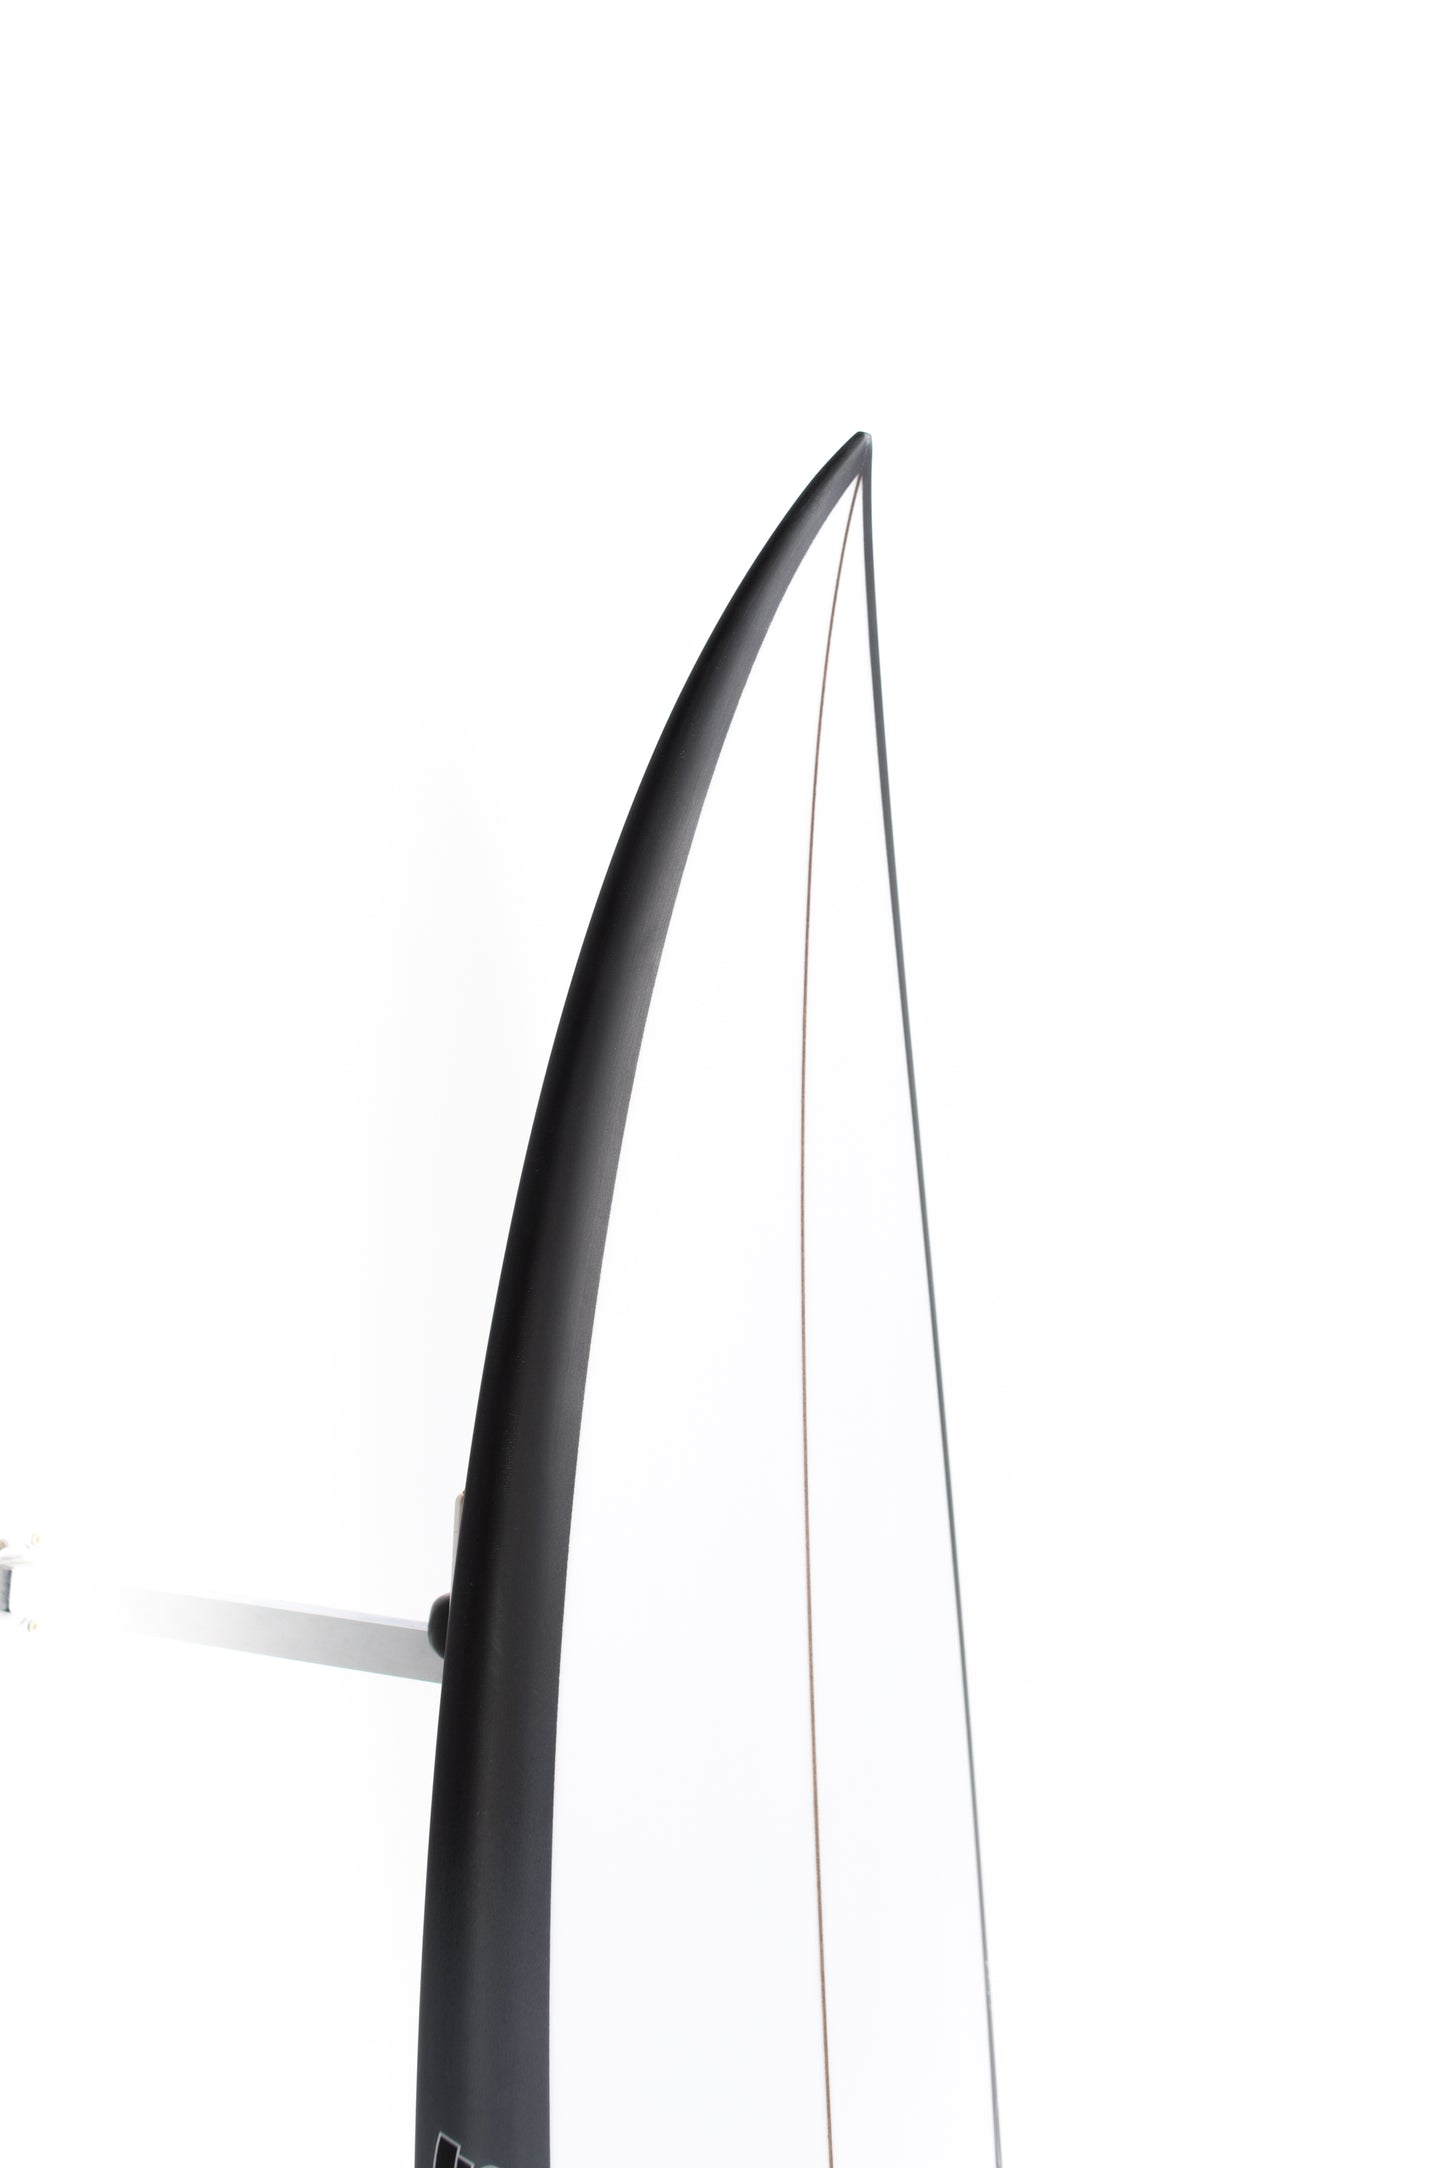 
                  
                    Pukas Surf Shop - Pukas Surfboard - TASTY TREAT ALL ROUND by Axel Lorentz - 6'0" x 19.63 x 2.55 x 31.96L - AX09873
                  
                